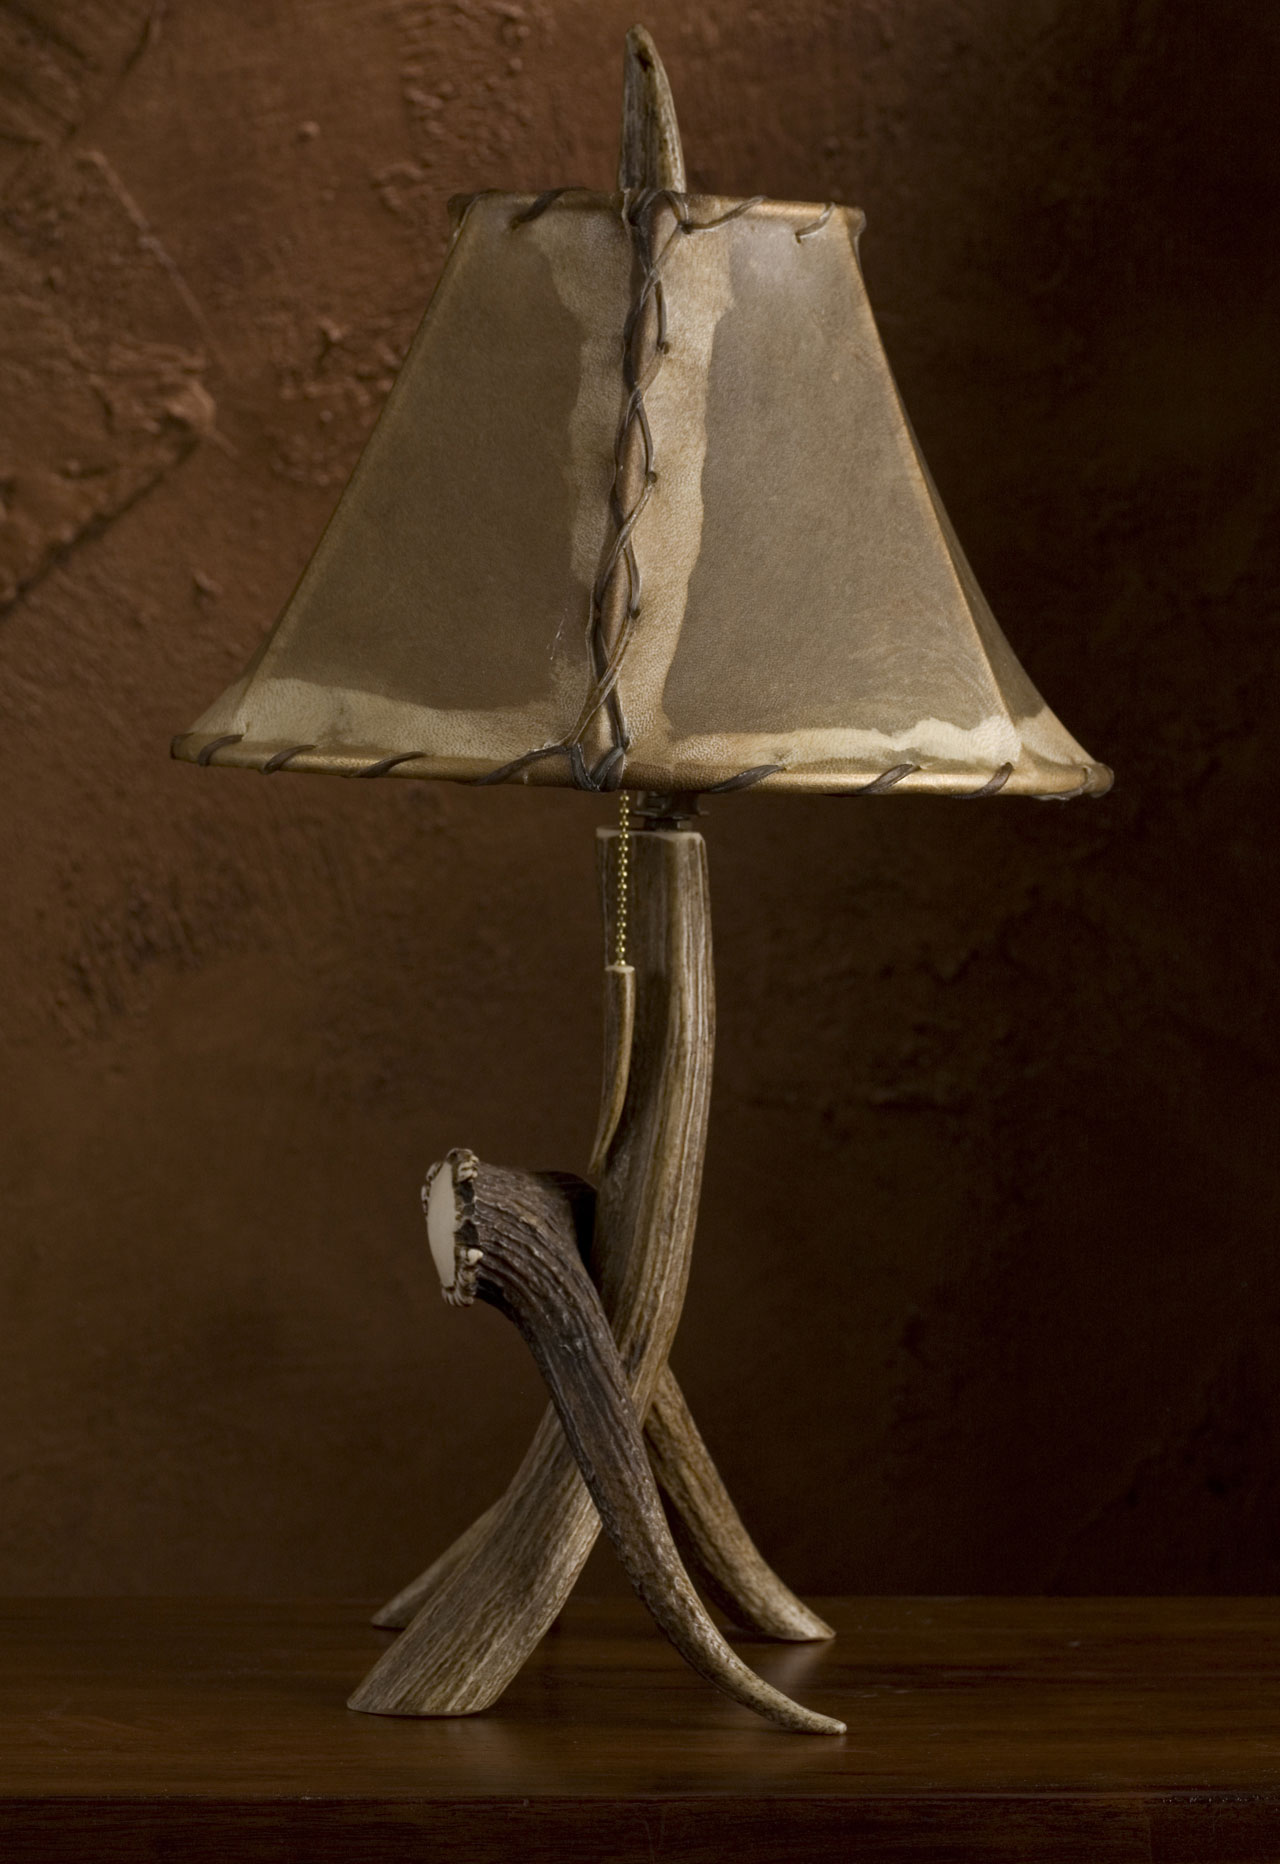 Antler Art and Design: Antler lamps, tables, chandeliers in